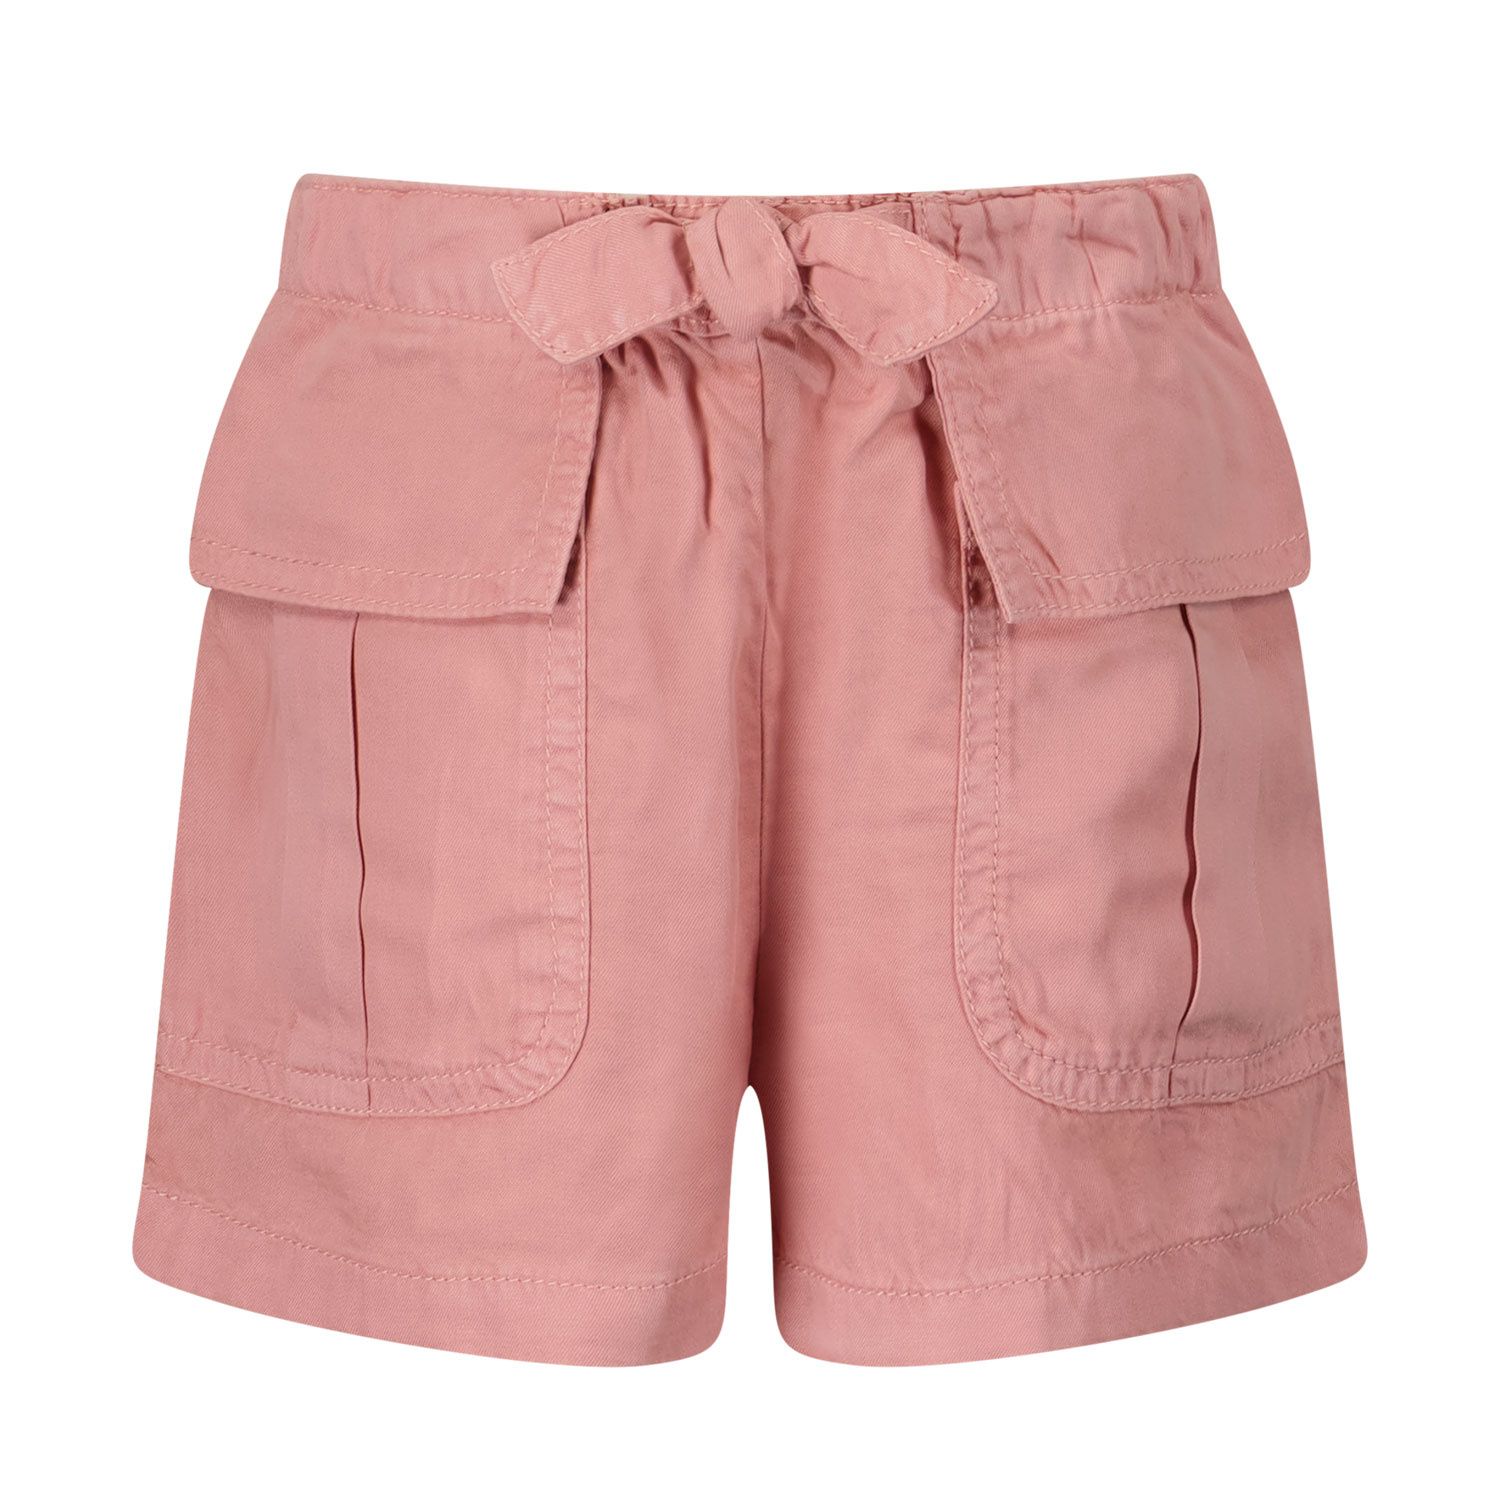 Afbeelding van Mayoral 3274 kinder shorts licht roze